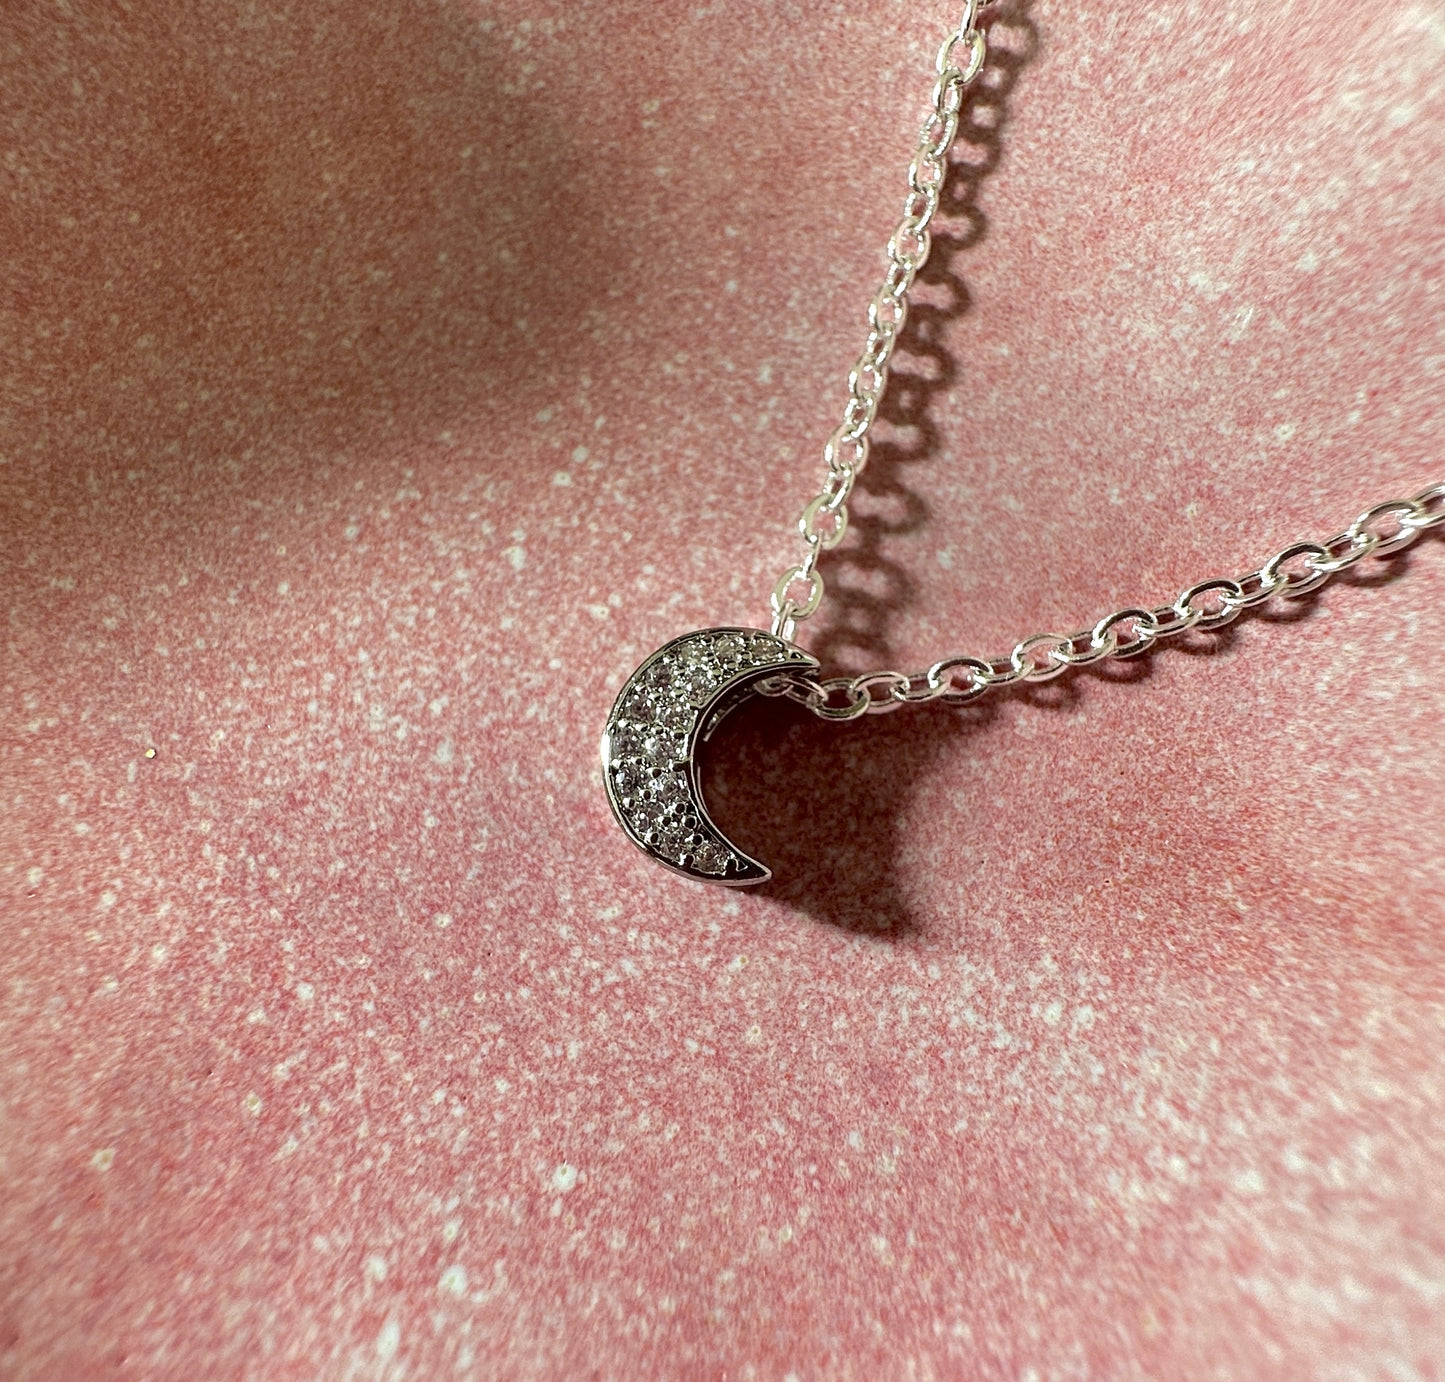 Tiny CZ Mini Moon Silver Necklace.